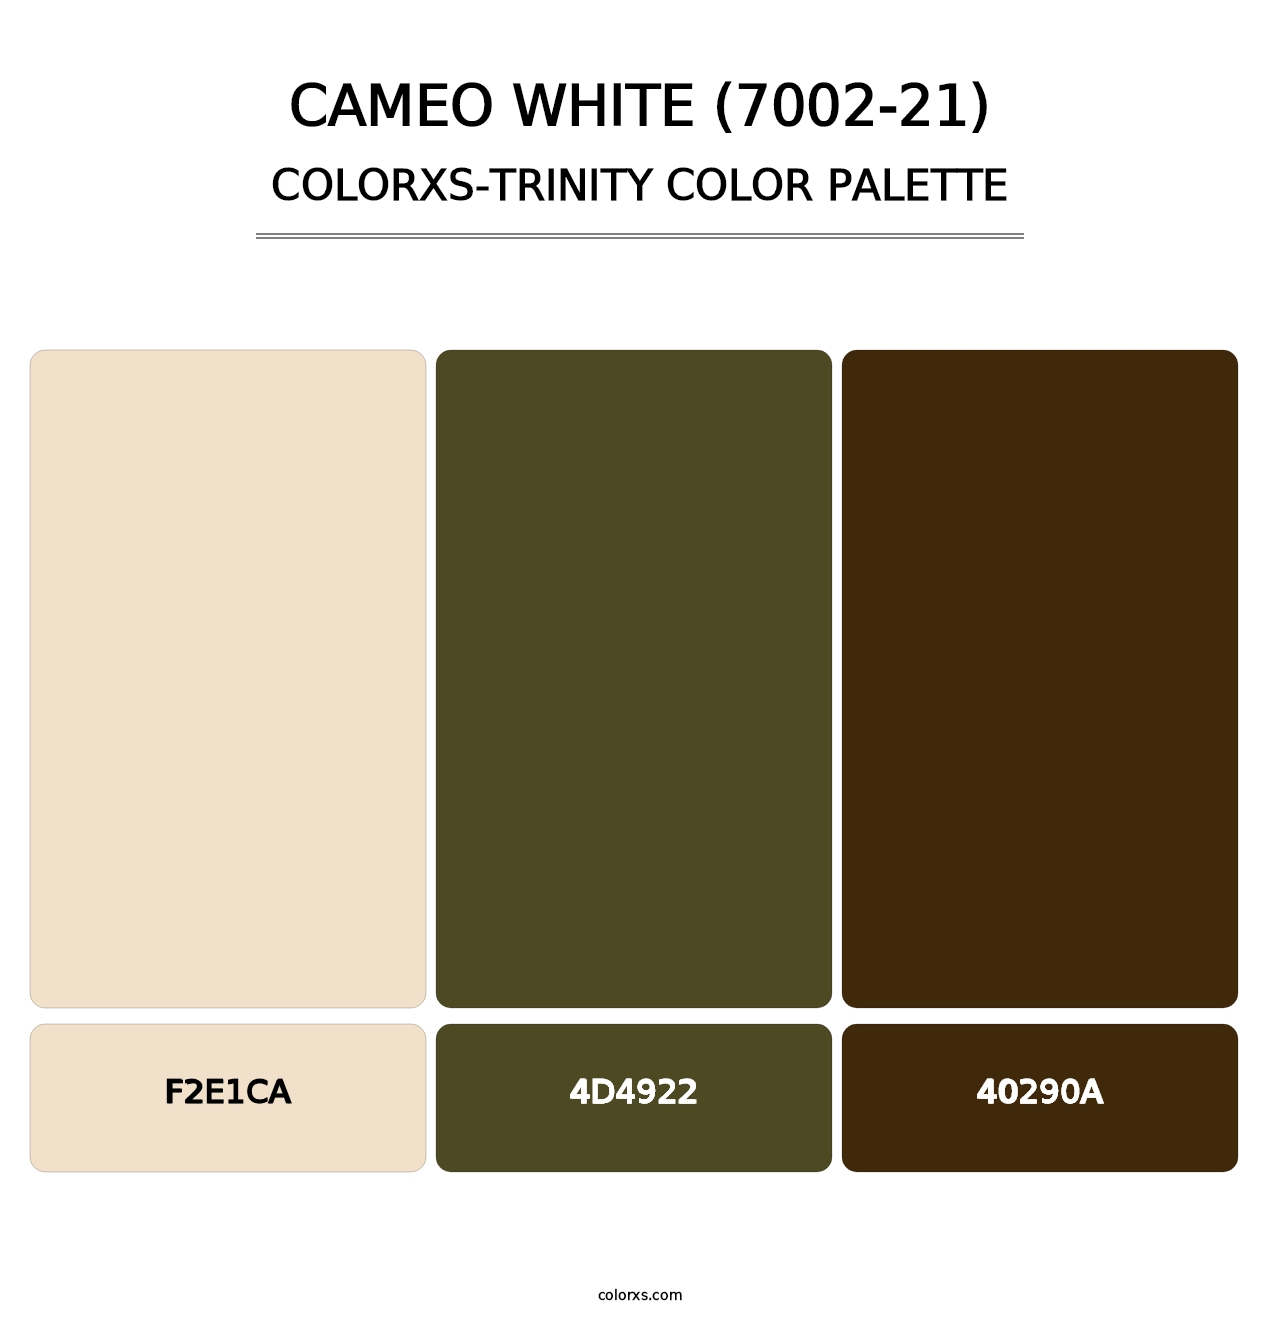 Cameo White (7002-21) - Colorxs Trinity Palette